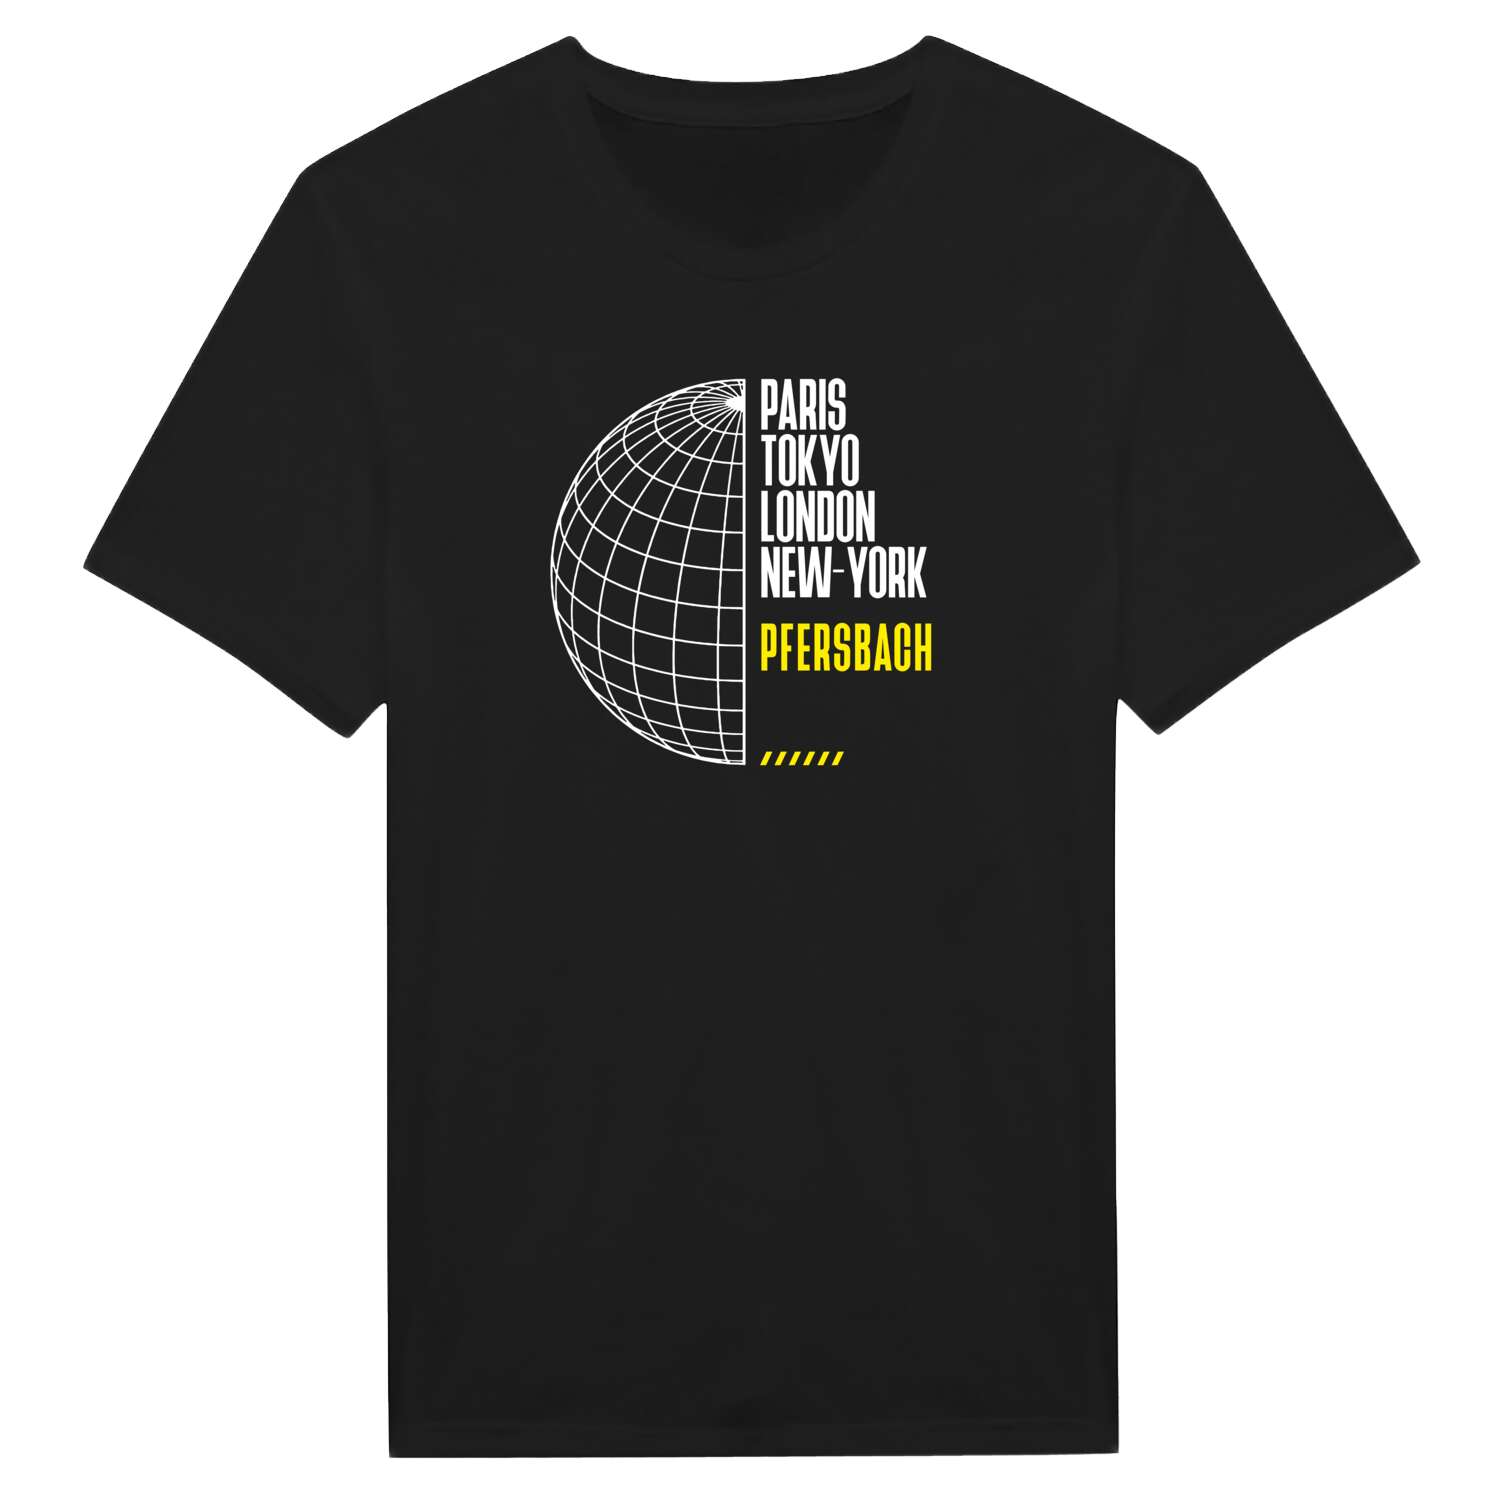 Pfersbach T-Shirt »Paris Tokyo London«